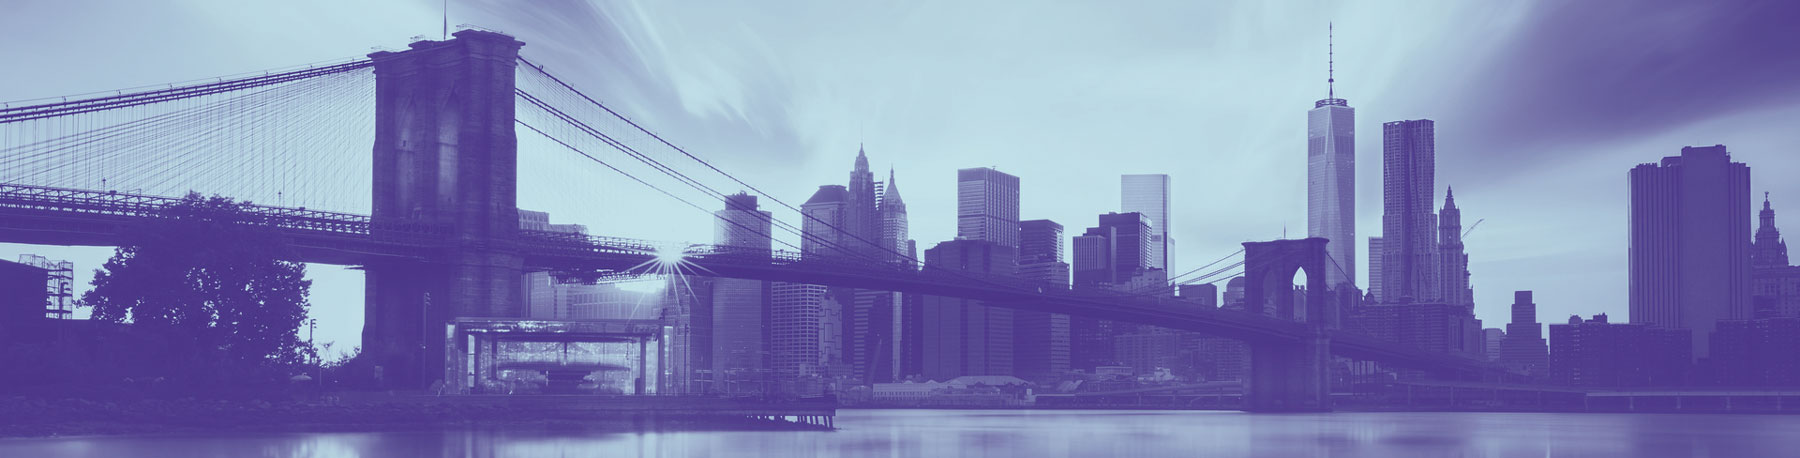 Build Better B2B Relationships - Brooklyn Bridge